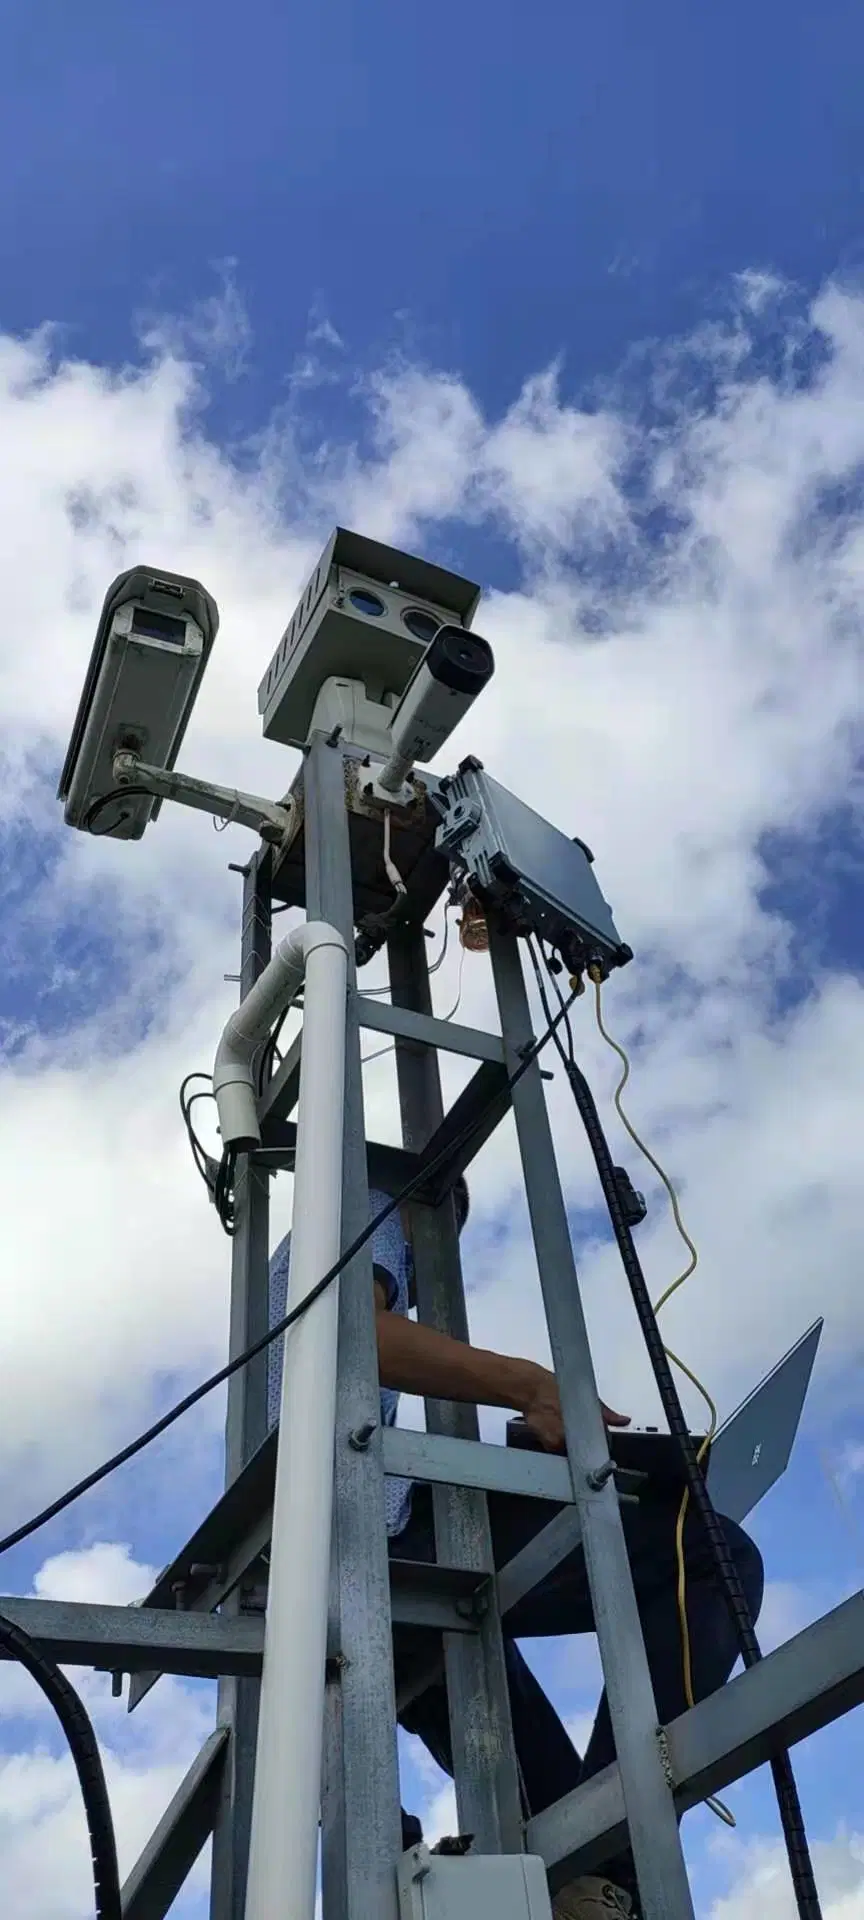 Maritime Surveillance Radar to Keep Your Coastline Clekeep Your Coastline Clear of Unauthorized Intrusion